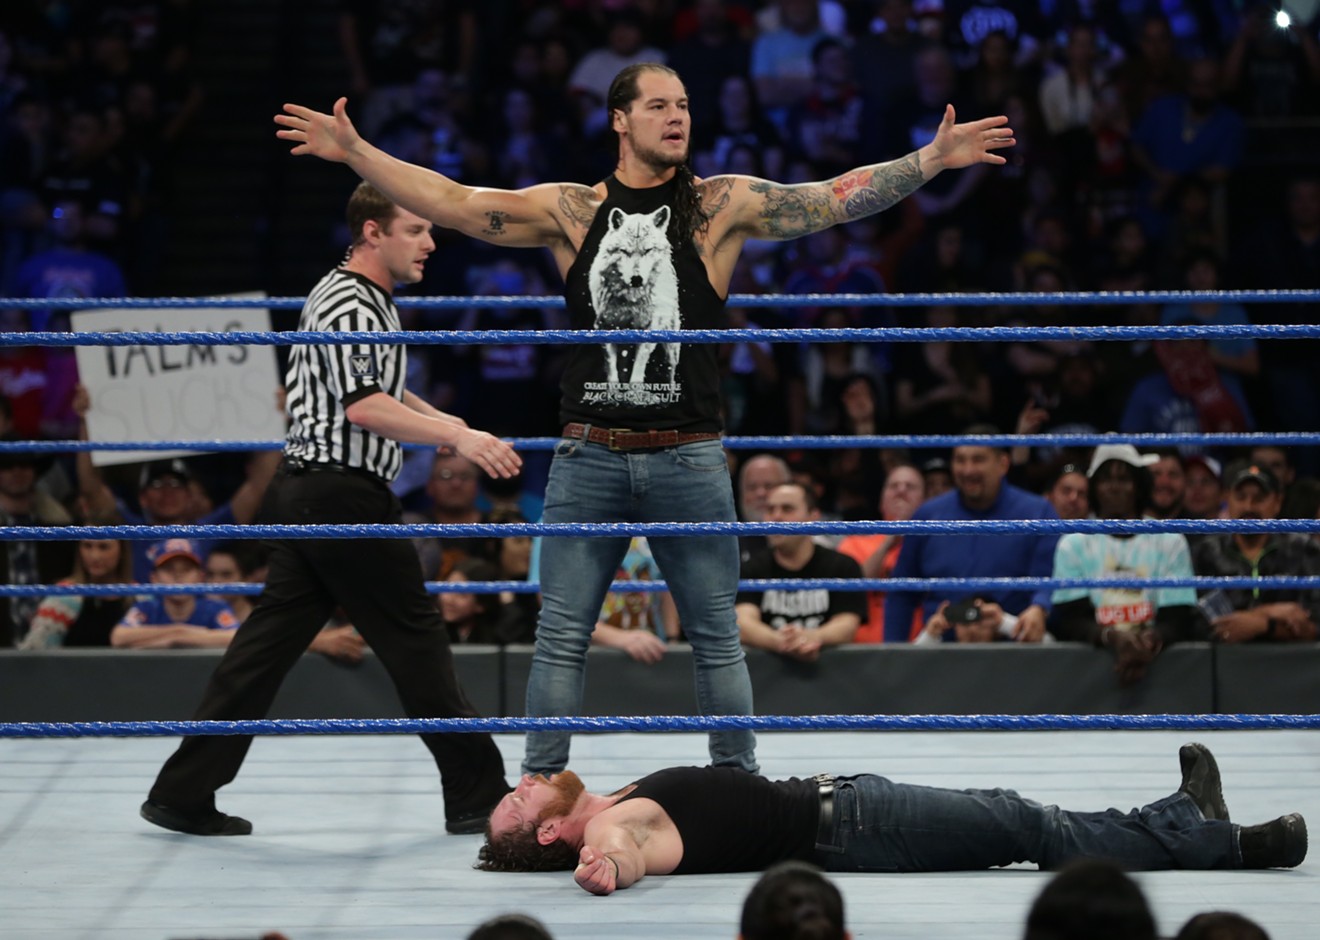 WWE superstar Baron Corbin stands tall over Dean Ambrose during a recent match.